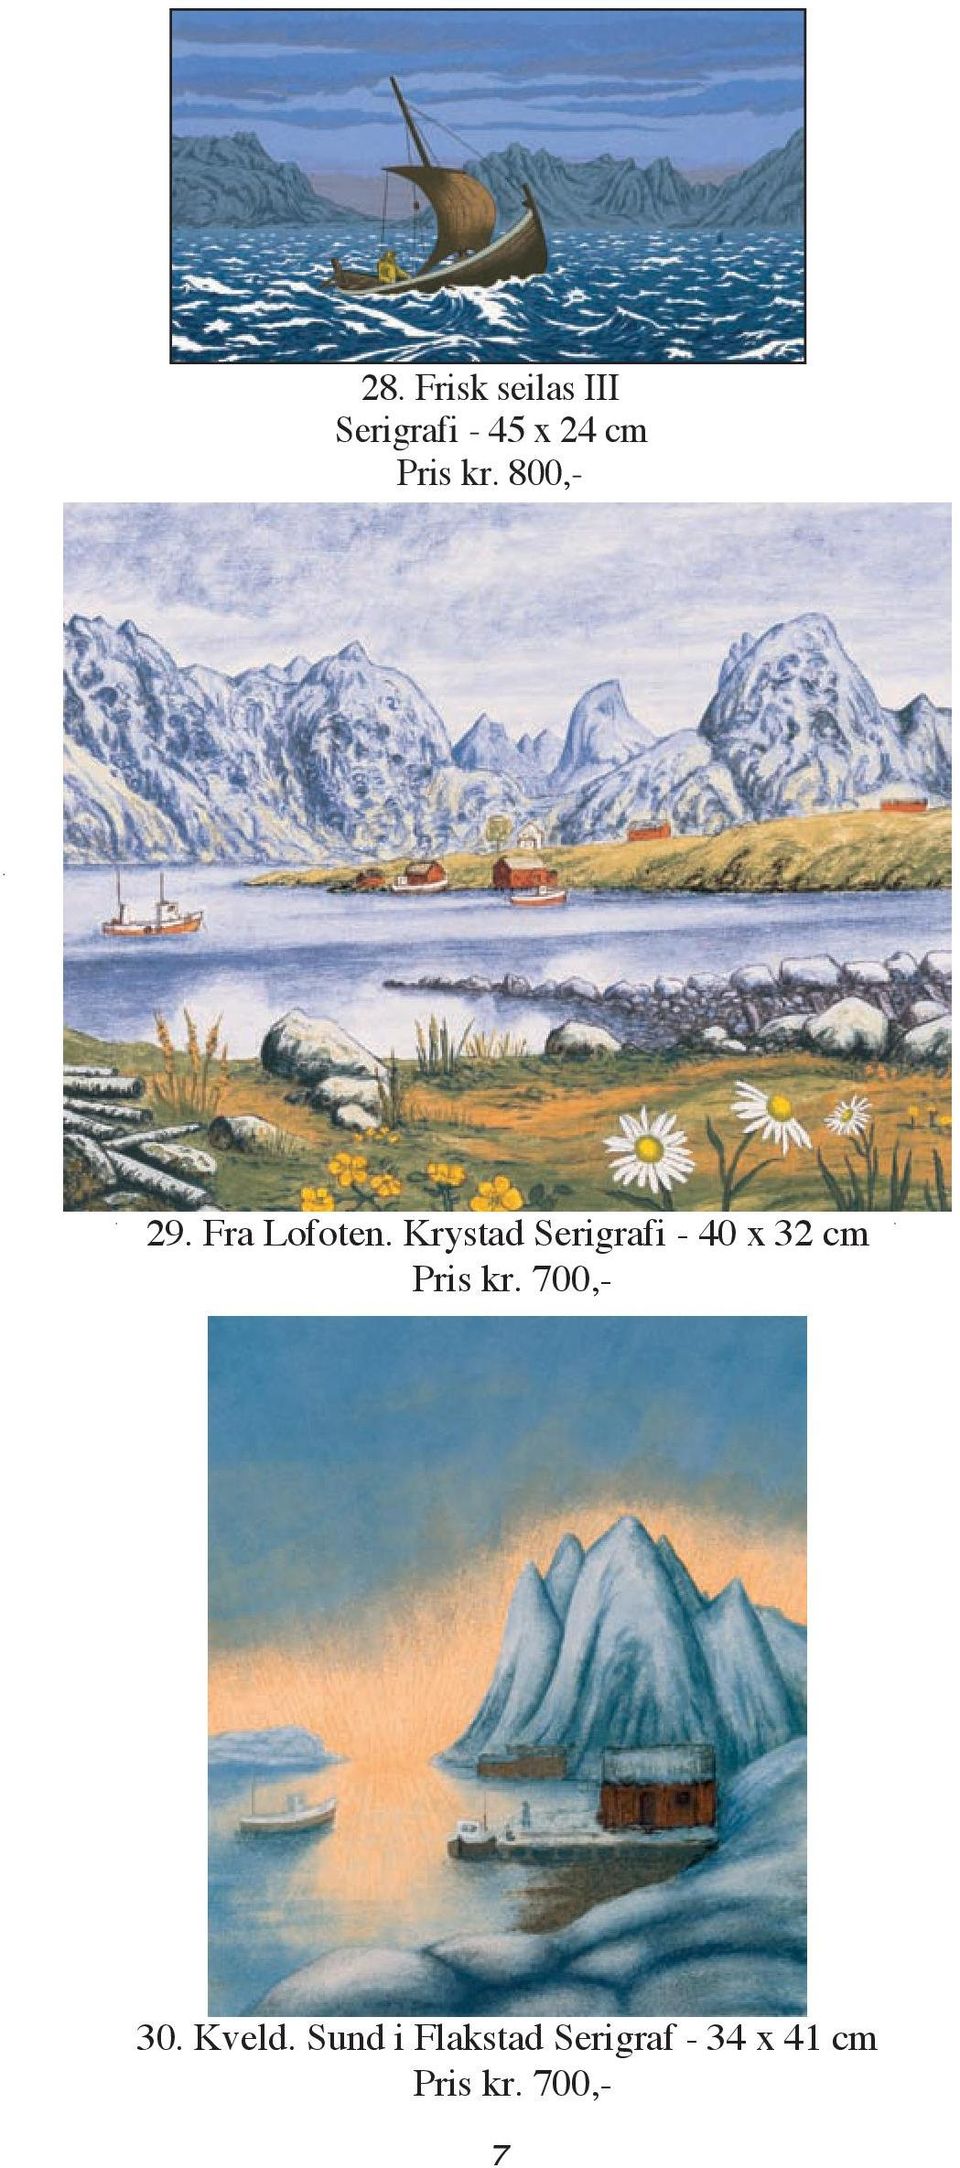 Krystad Serigrafi - 40 x 32 cm Pris kr.